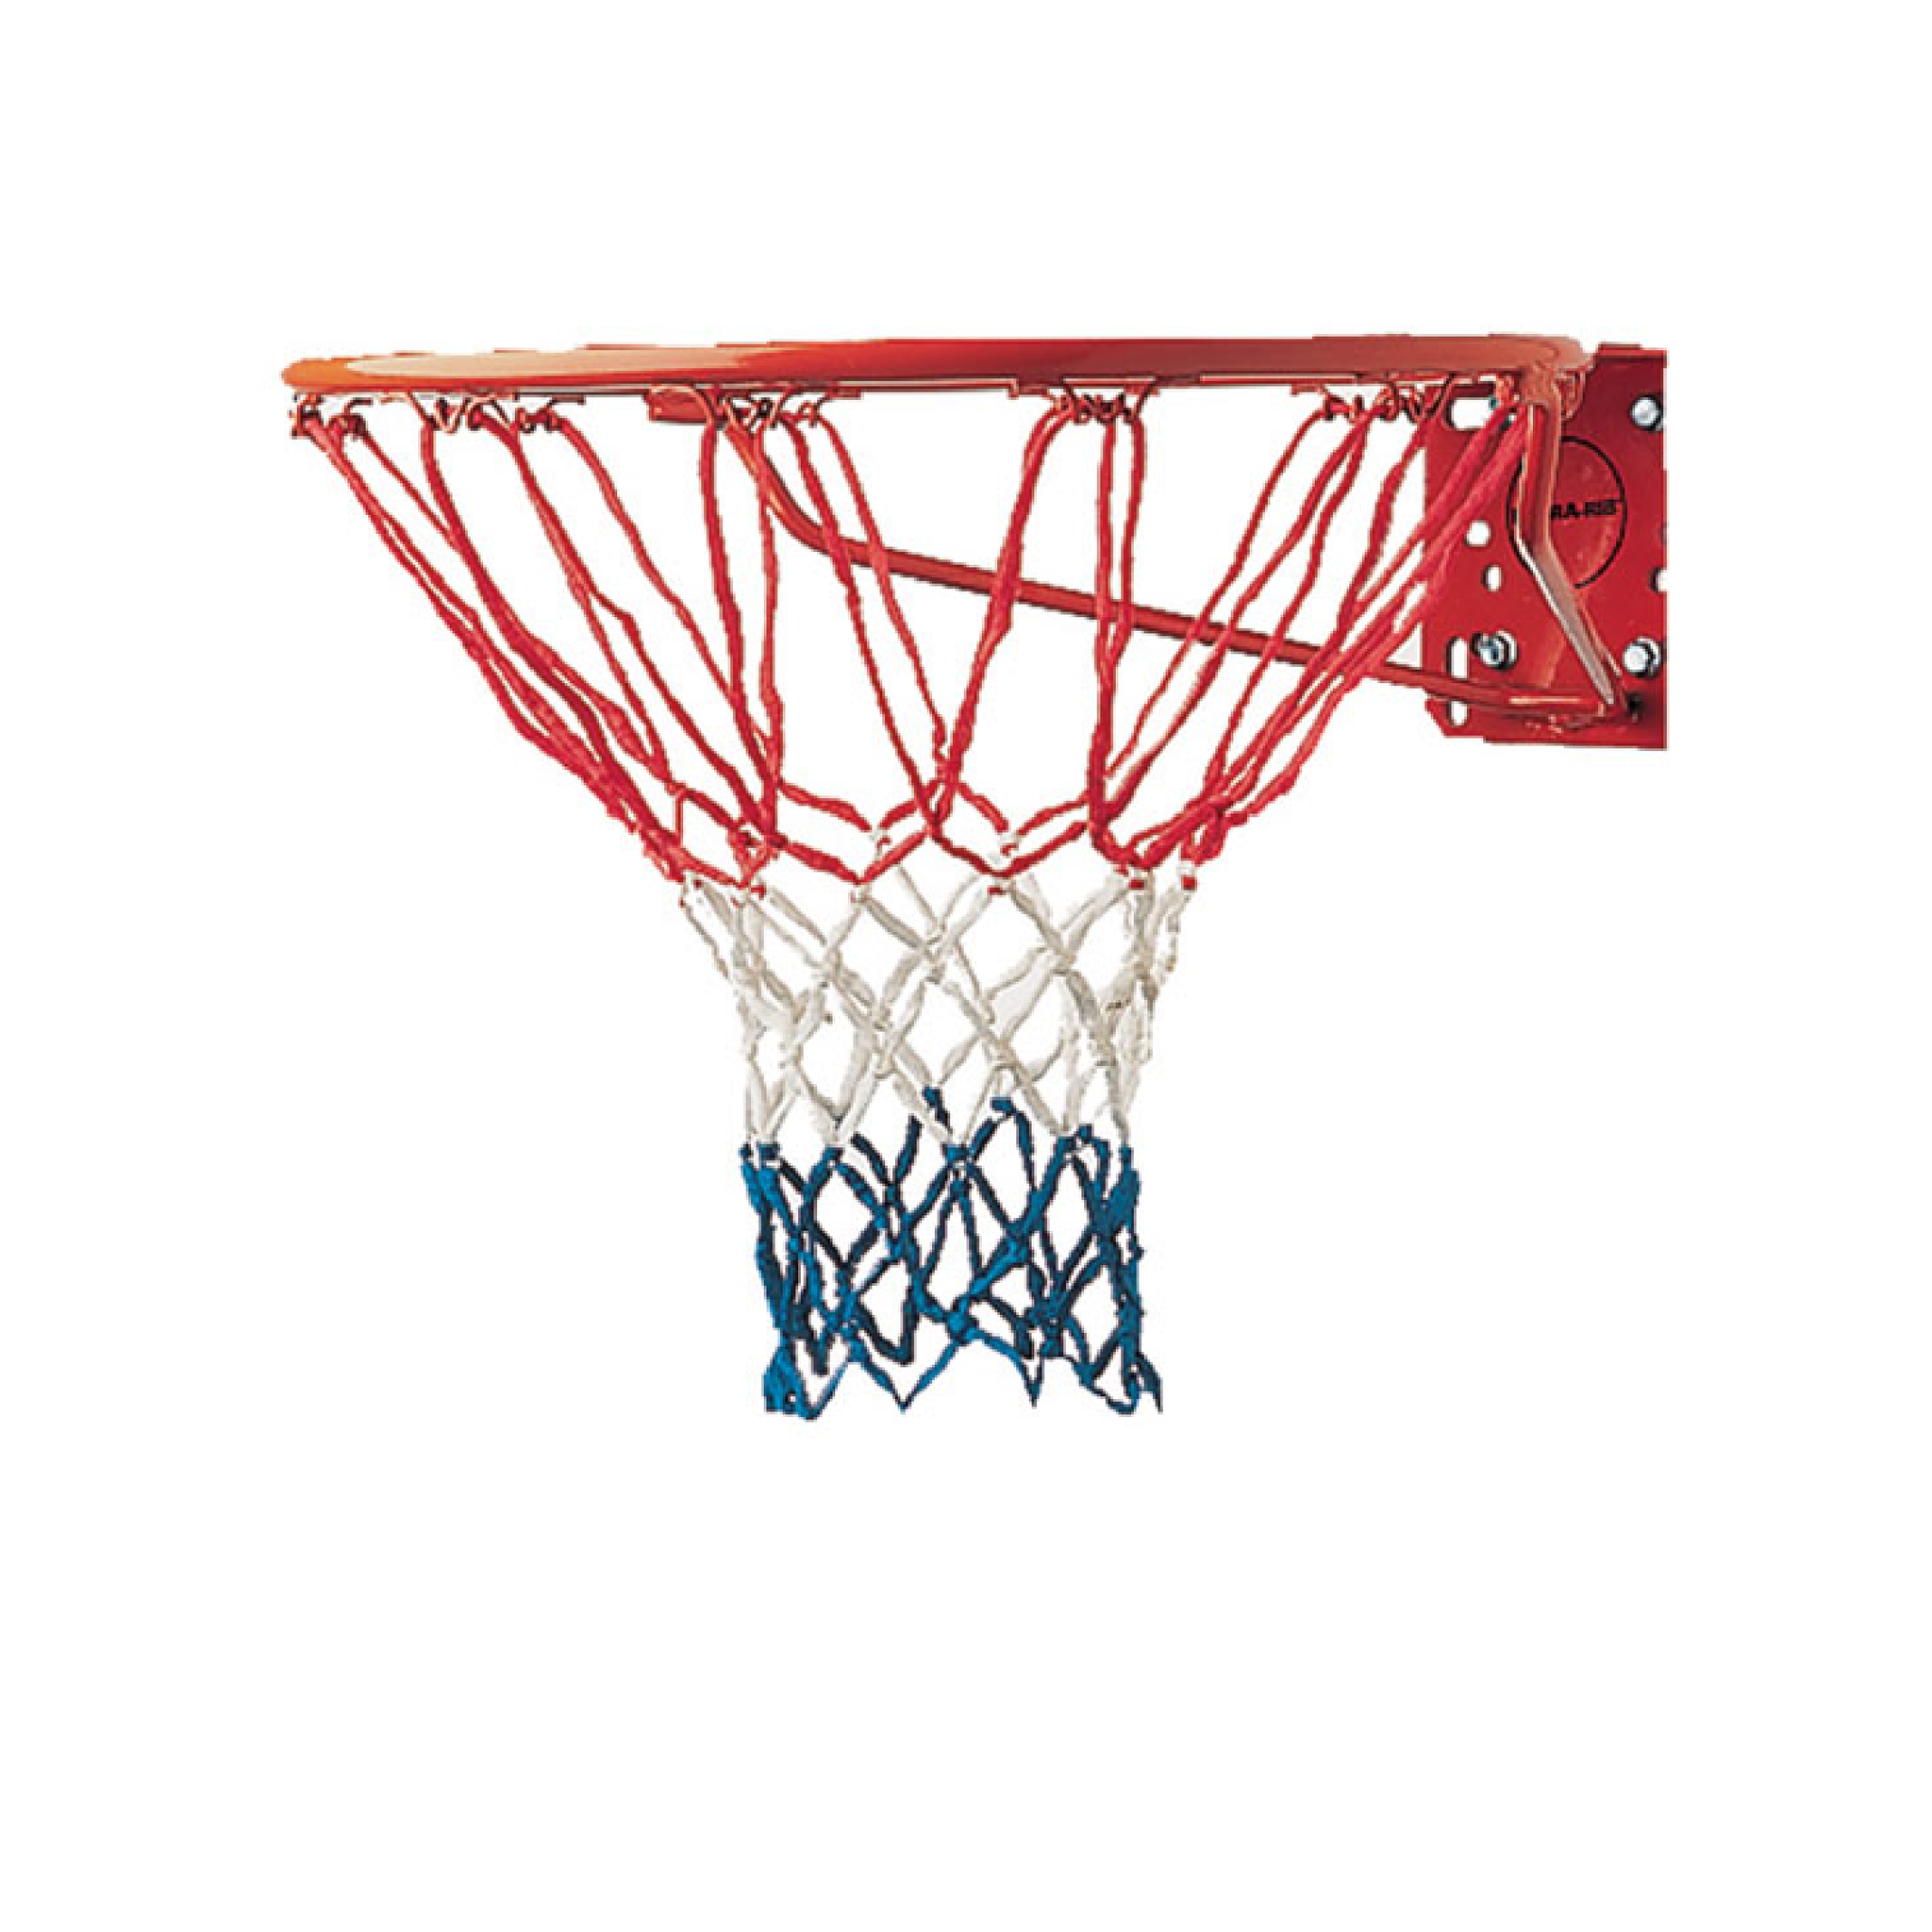 Champion 4MM Economy Red/White/Blue Basketball Net